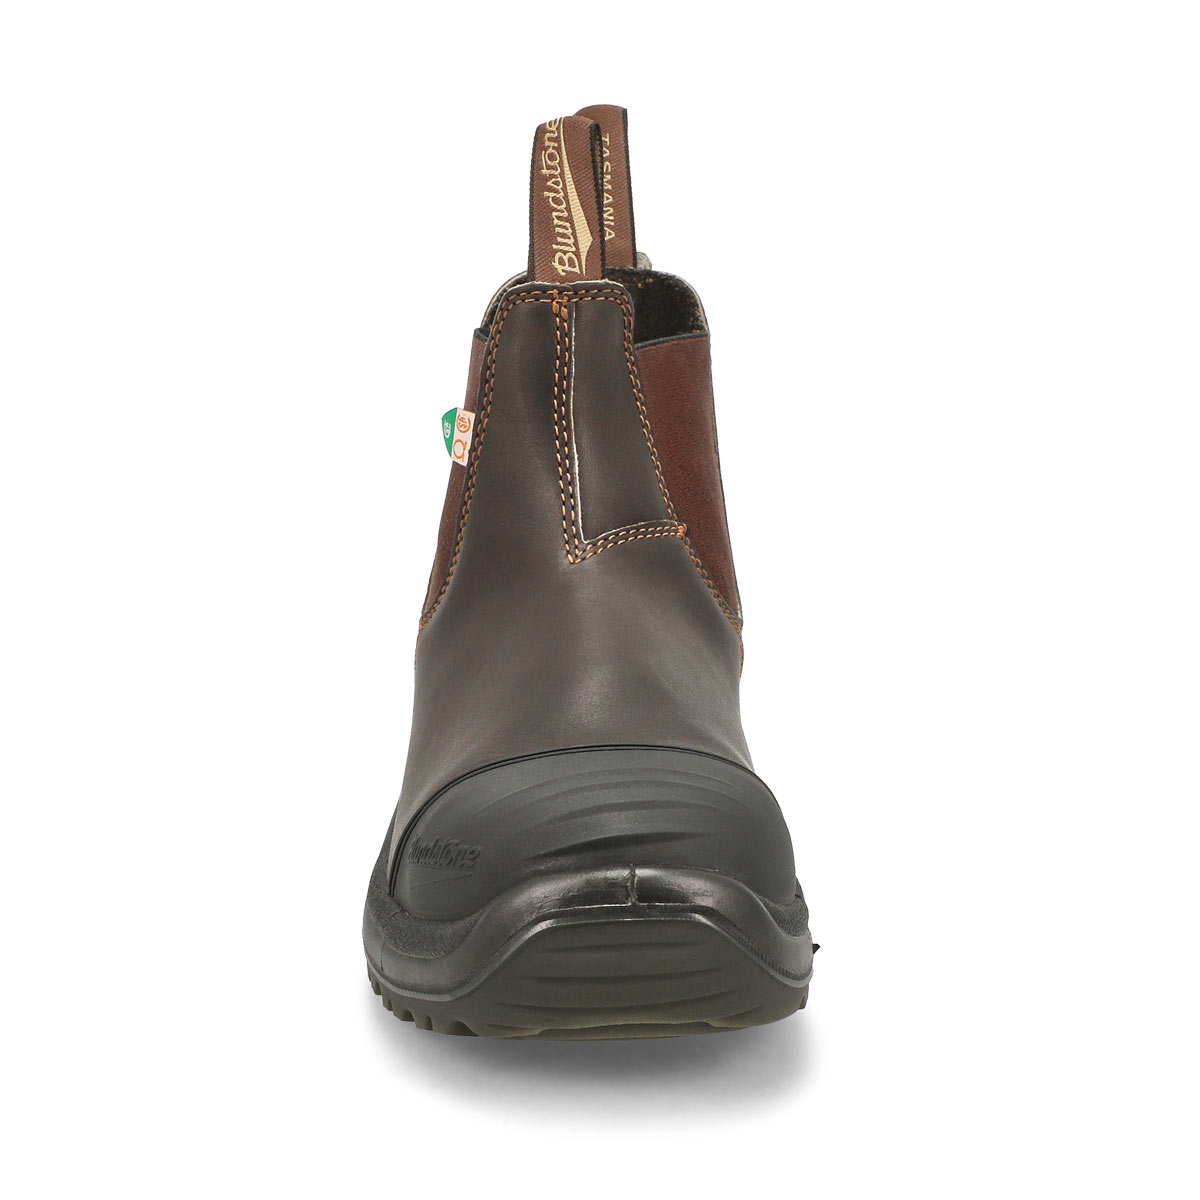 Unisex 167 CSA Boot - Stout Brown